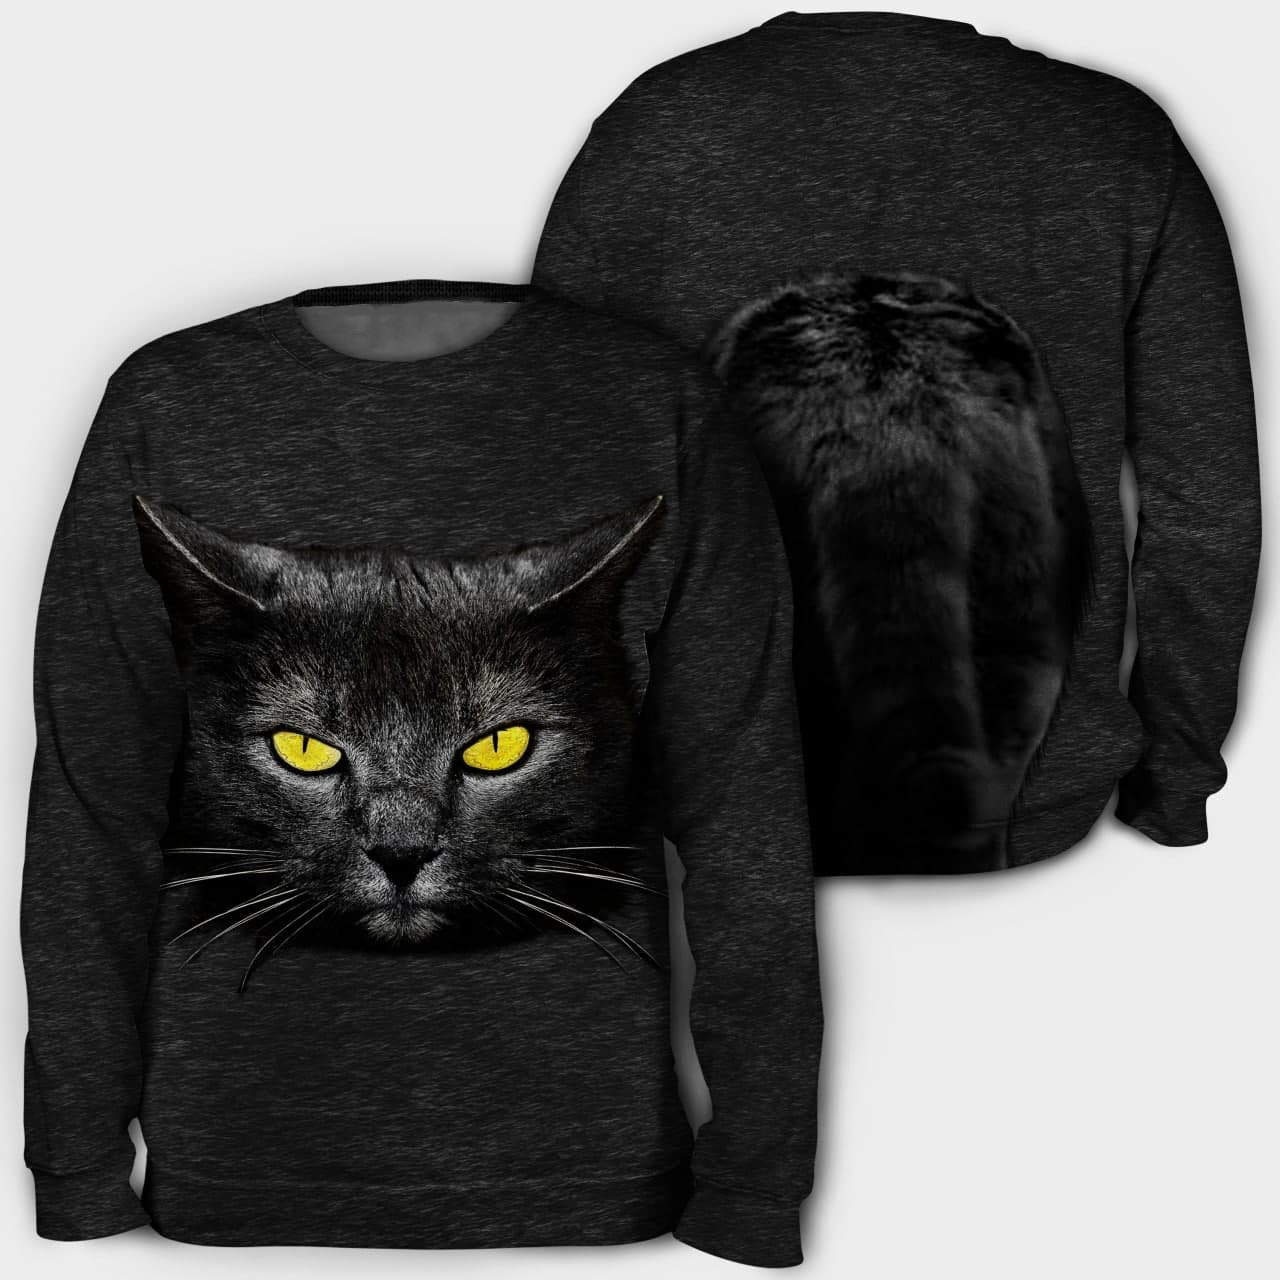 Unisex Cat Loves Darkness Hoodie, Black Cat Hoodie, Black Cat Shirt, Cat Lover Shirt, Animal